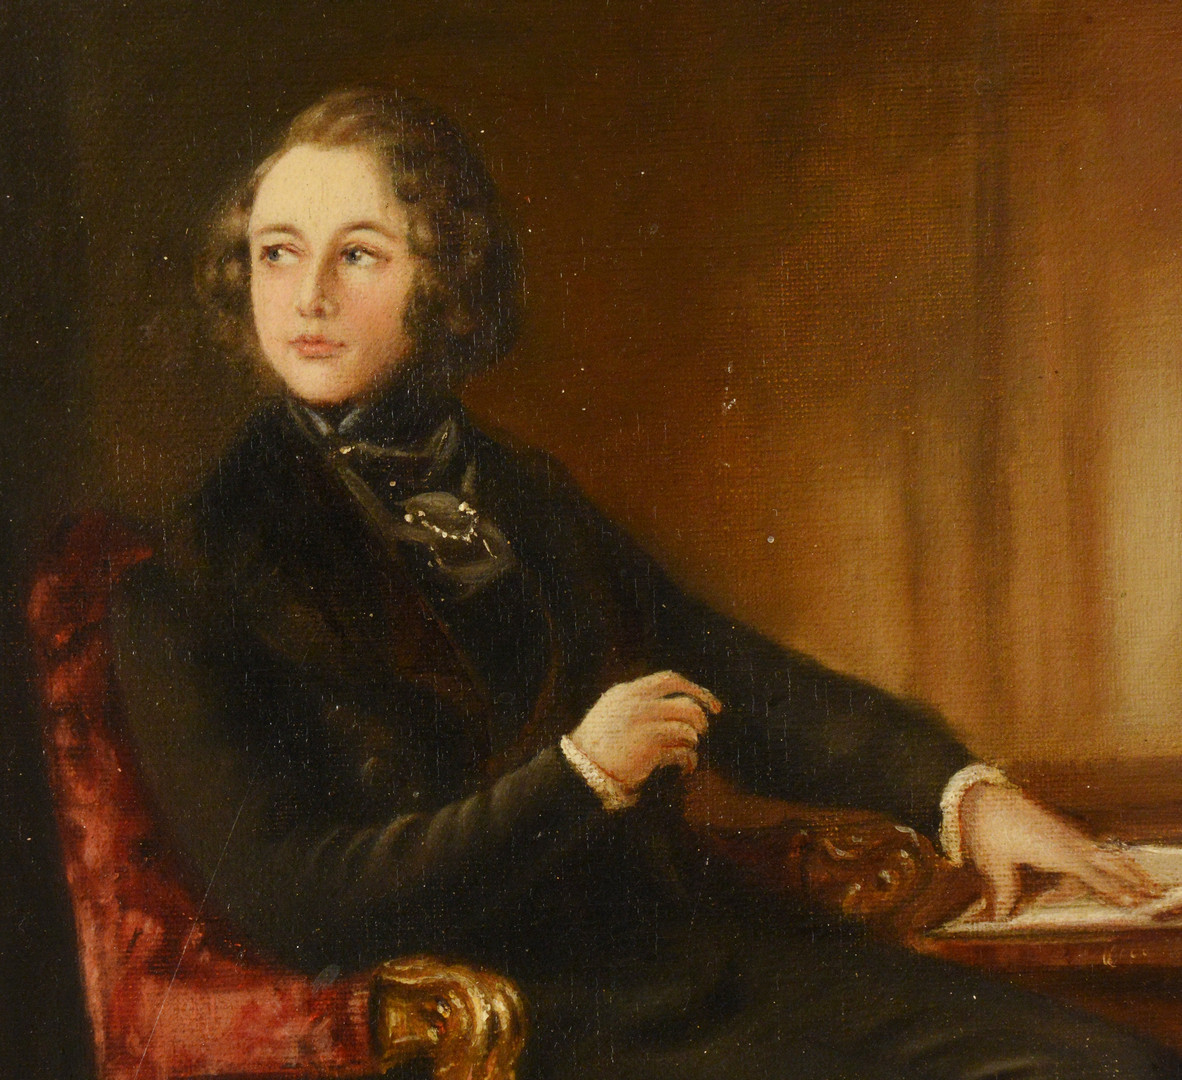 Lot 224: After D. Maclise, Dickens Portrait